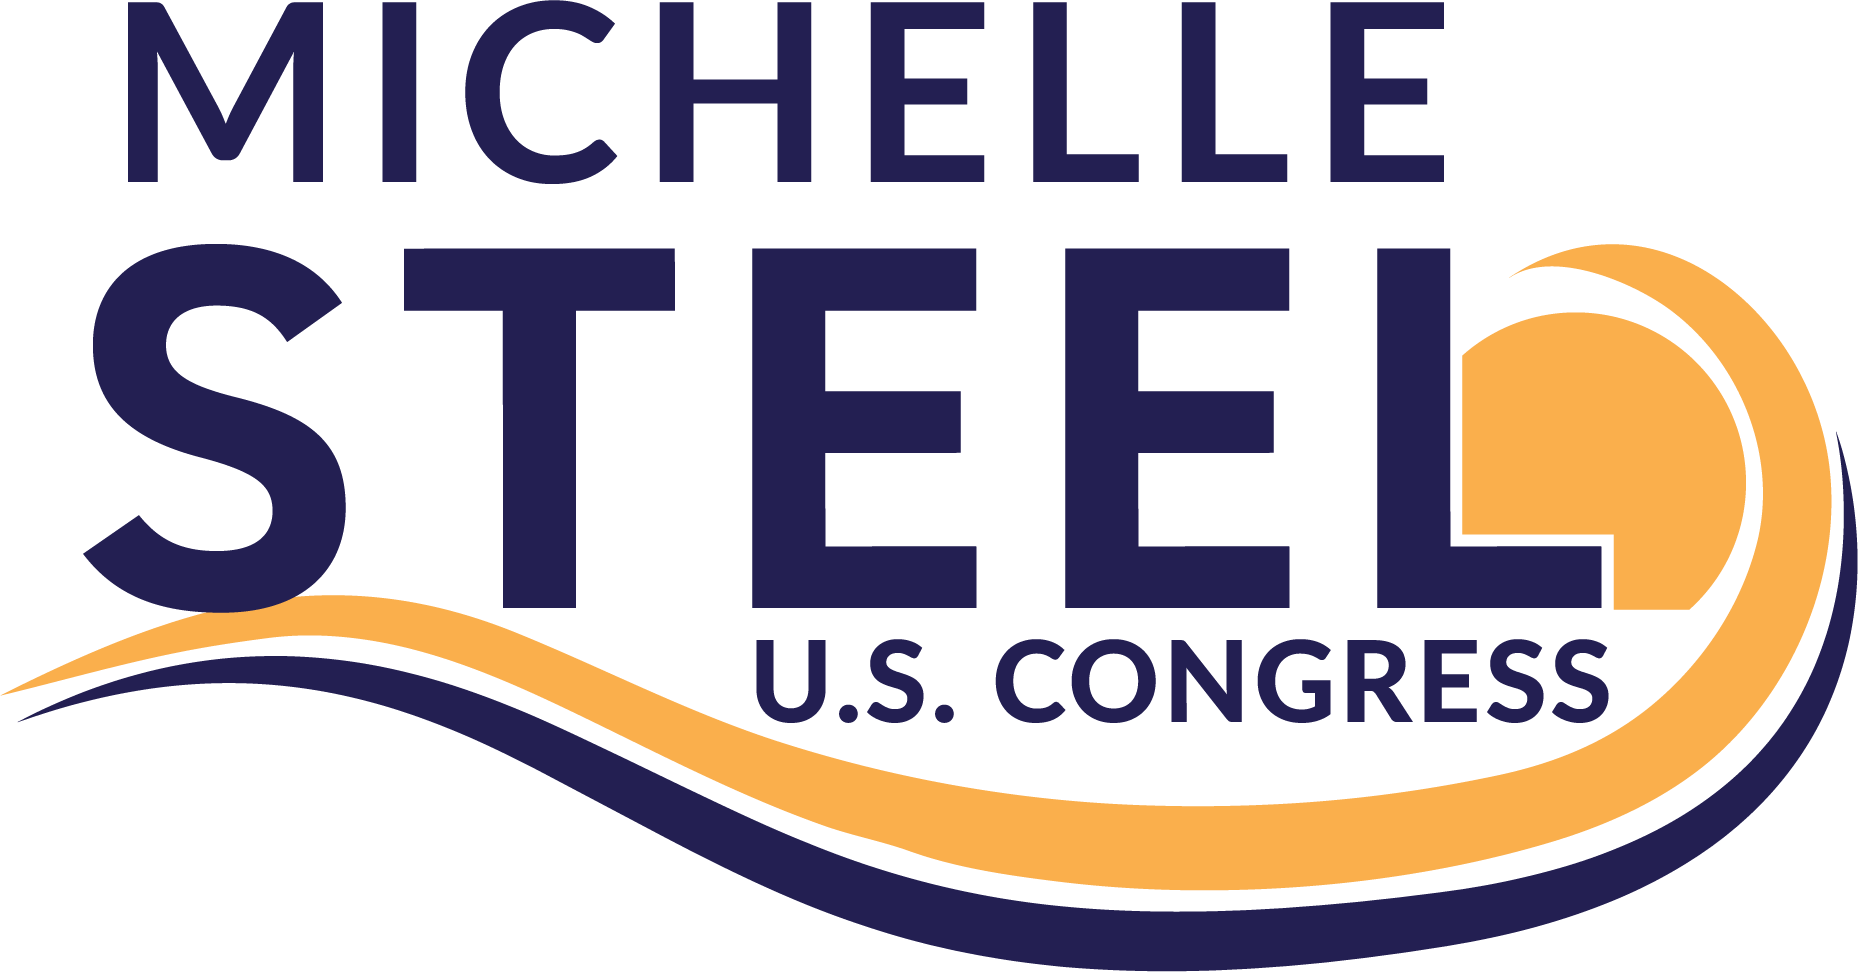 Michelle Steel for U.S. Congress